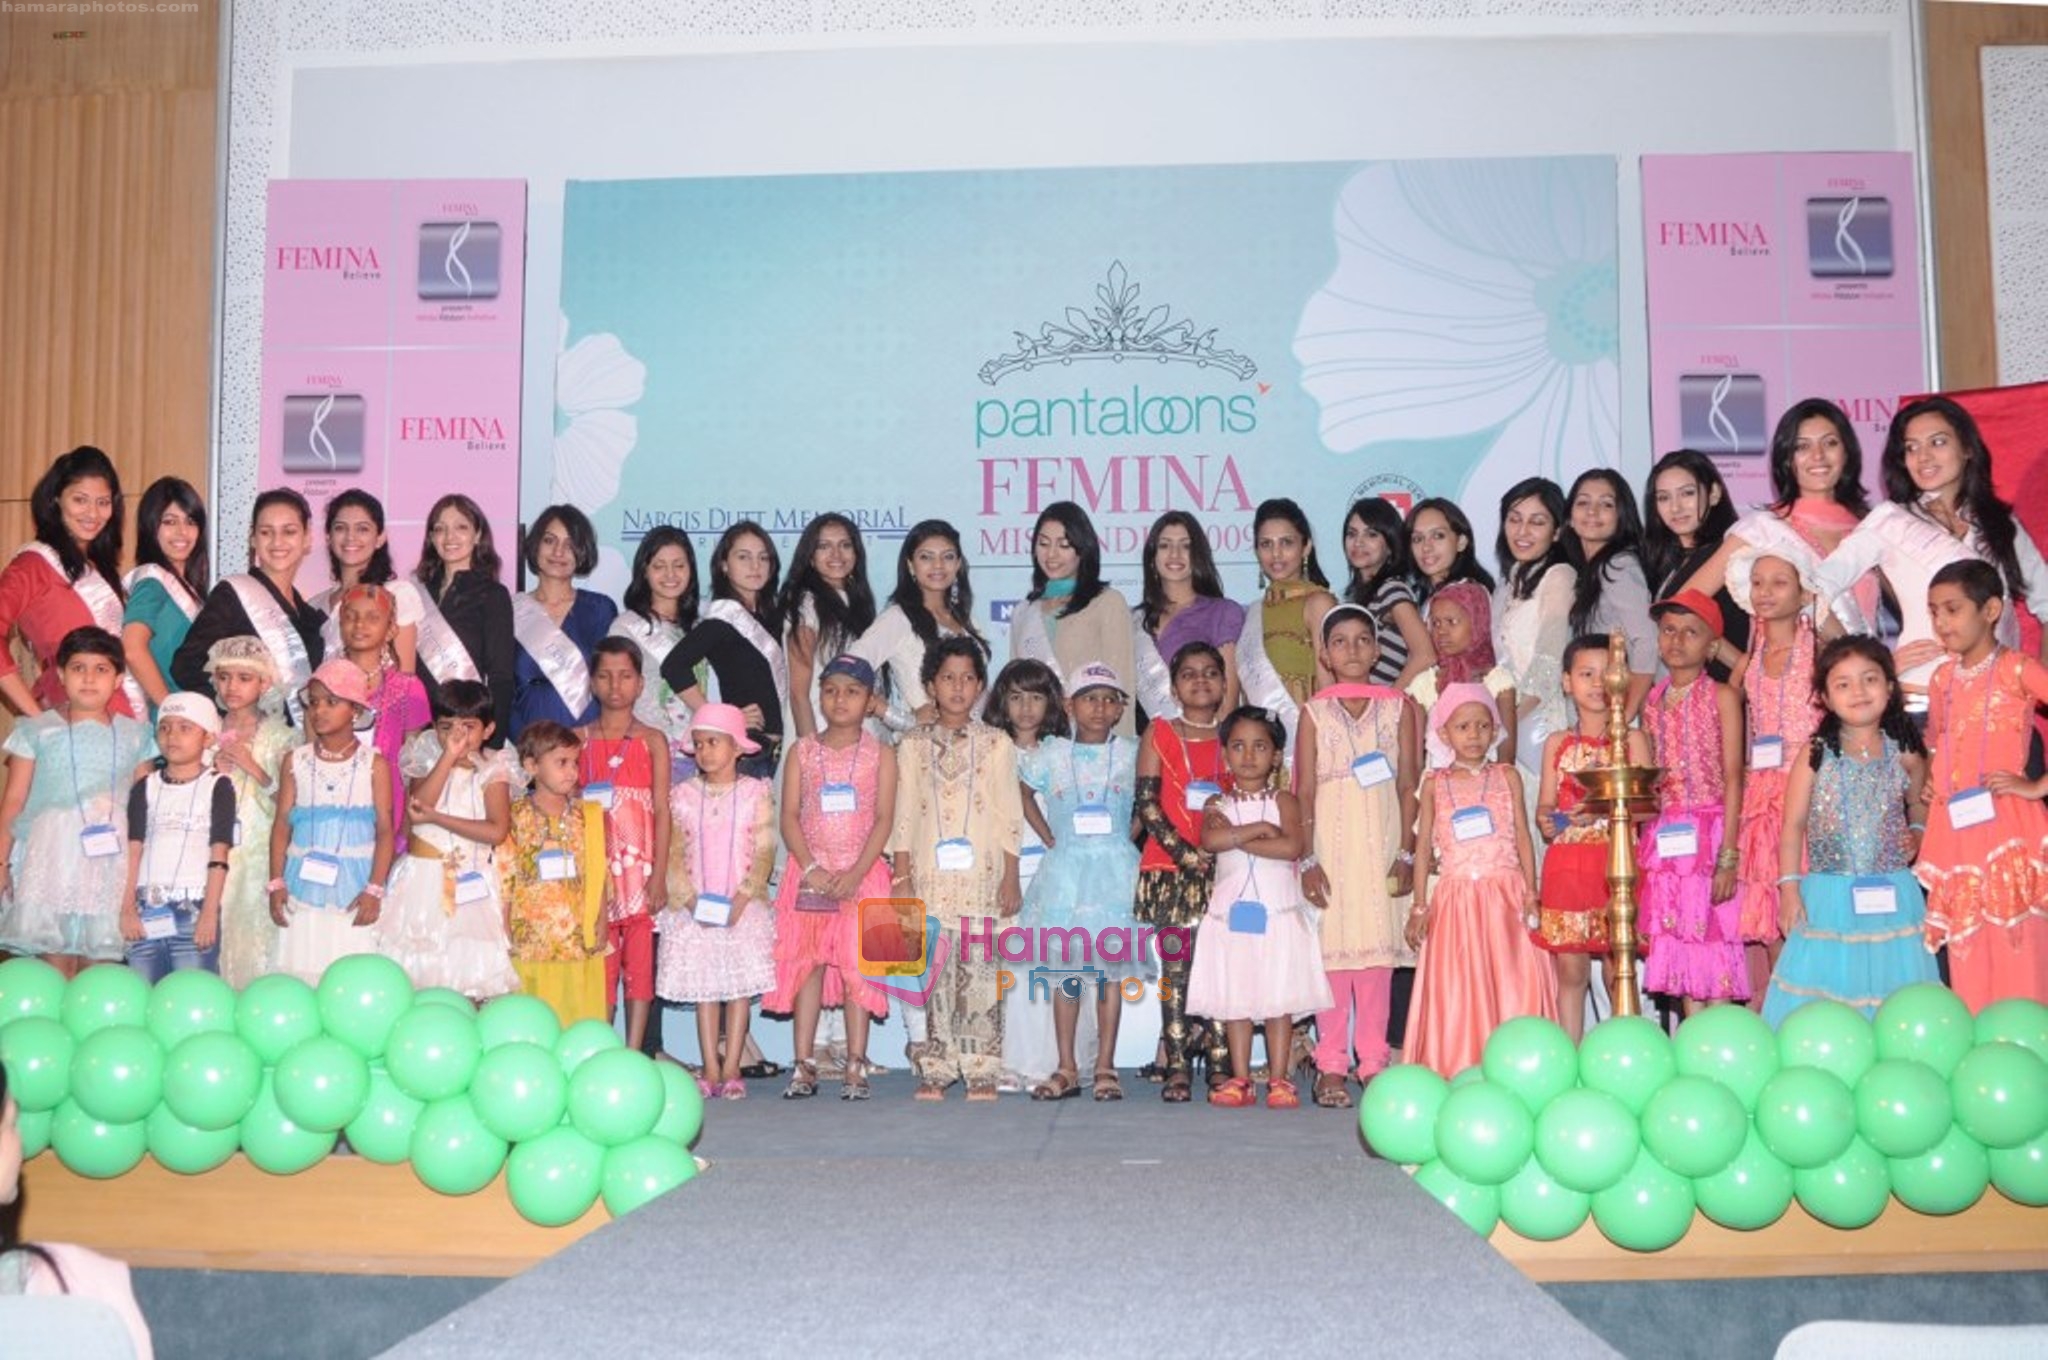 Miss India NGO visit at Tata Hospital in Mumbai on 24th March 2009 